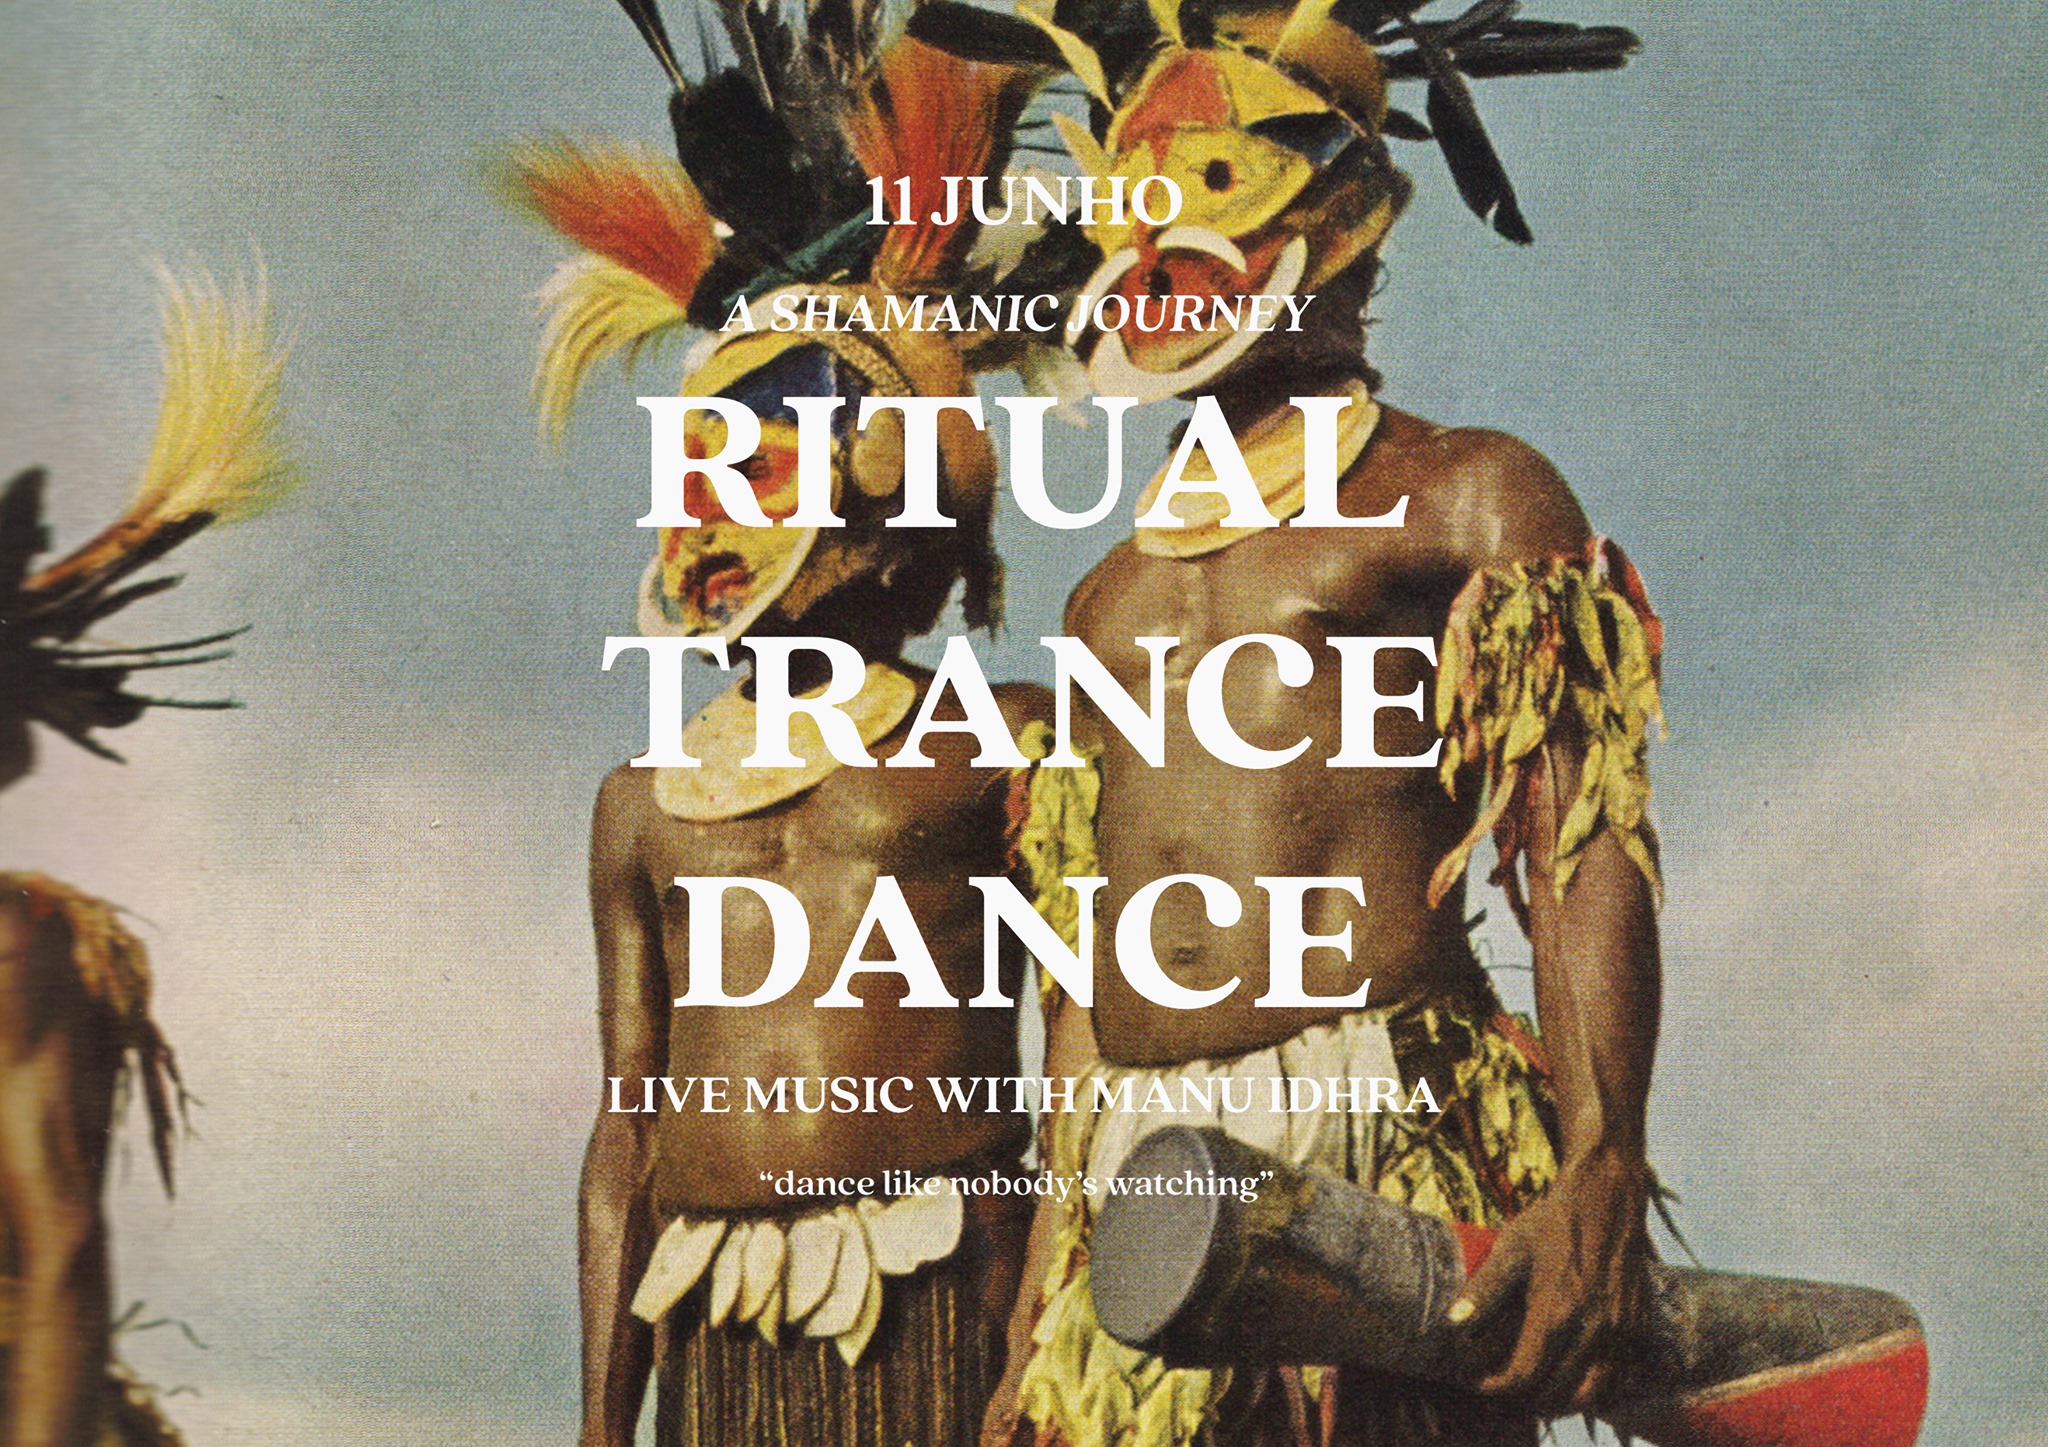 ESGOTADO! Ritual Trance Dance | A Shamanic Journey | !! LIVE MUSIC WITH MANU IDHRA !!